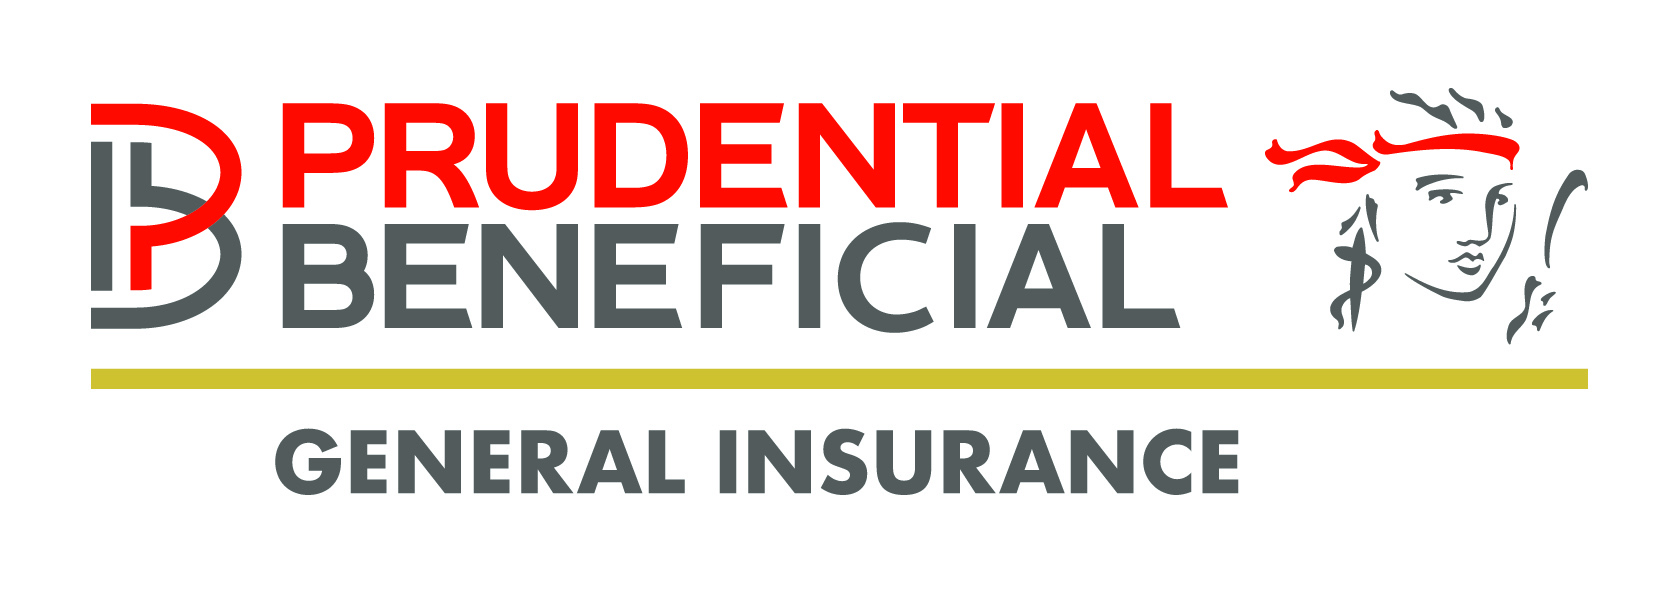 PB-General-Insurance-CMYK